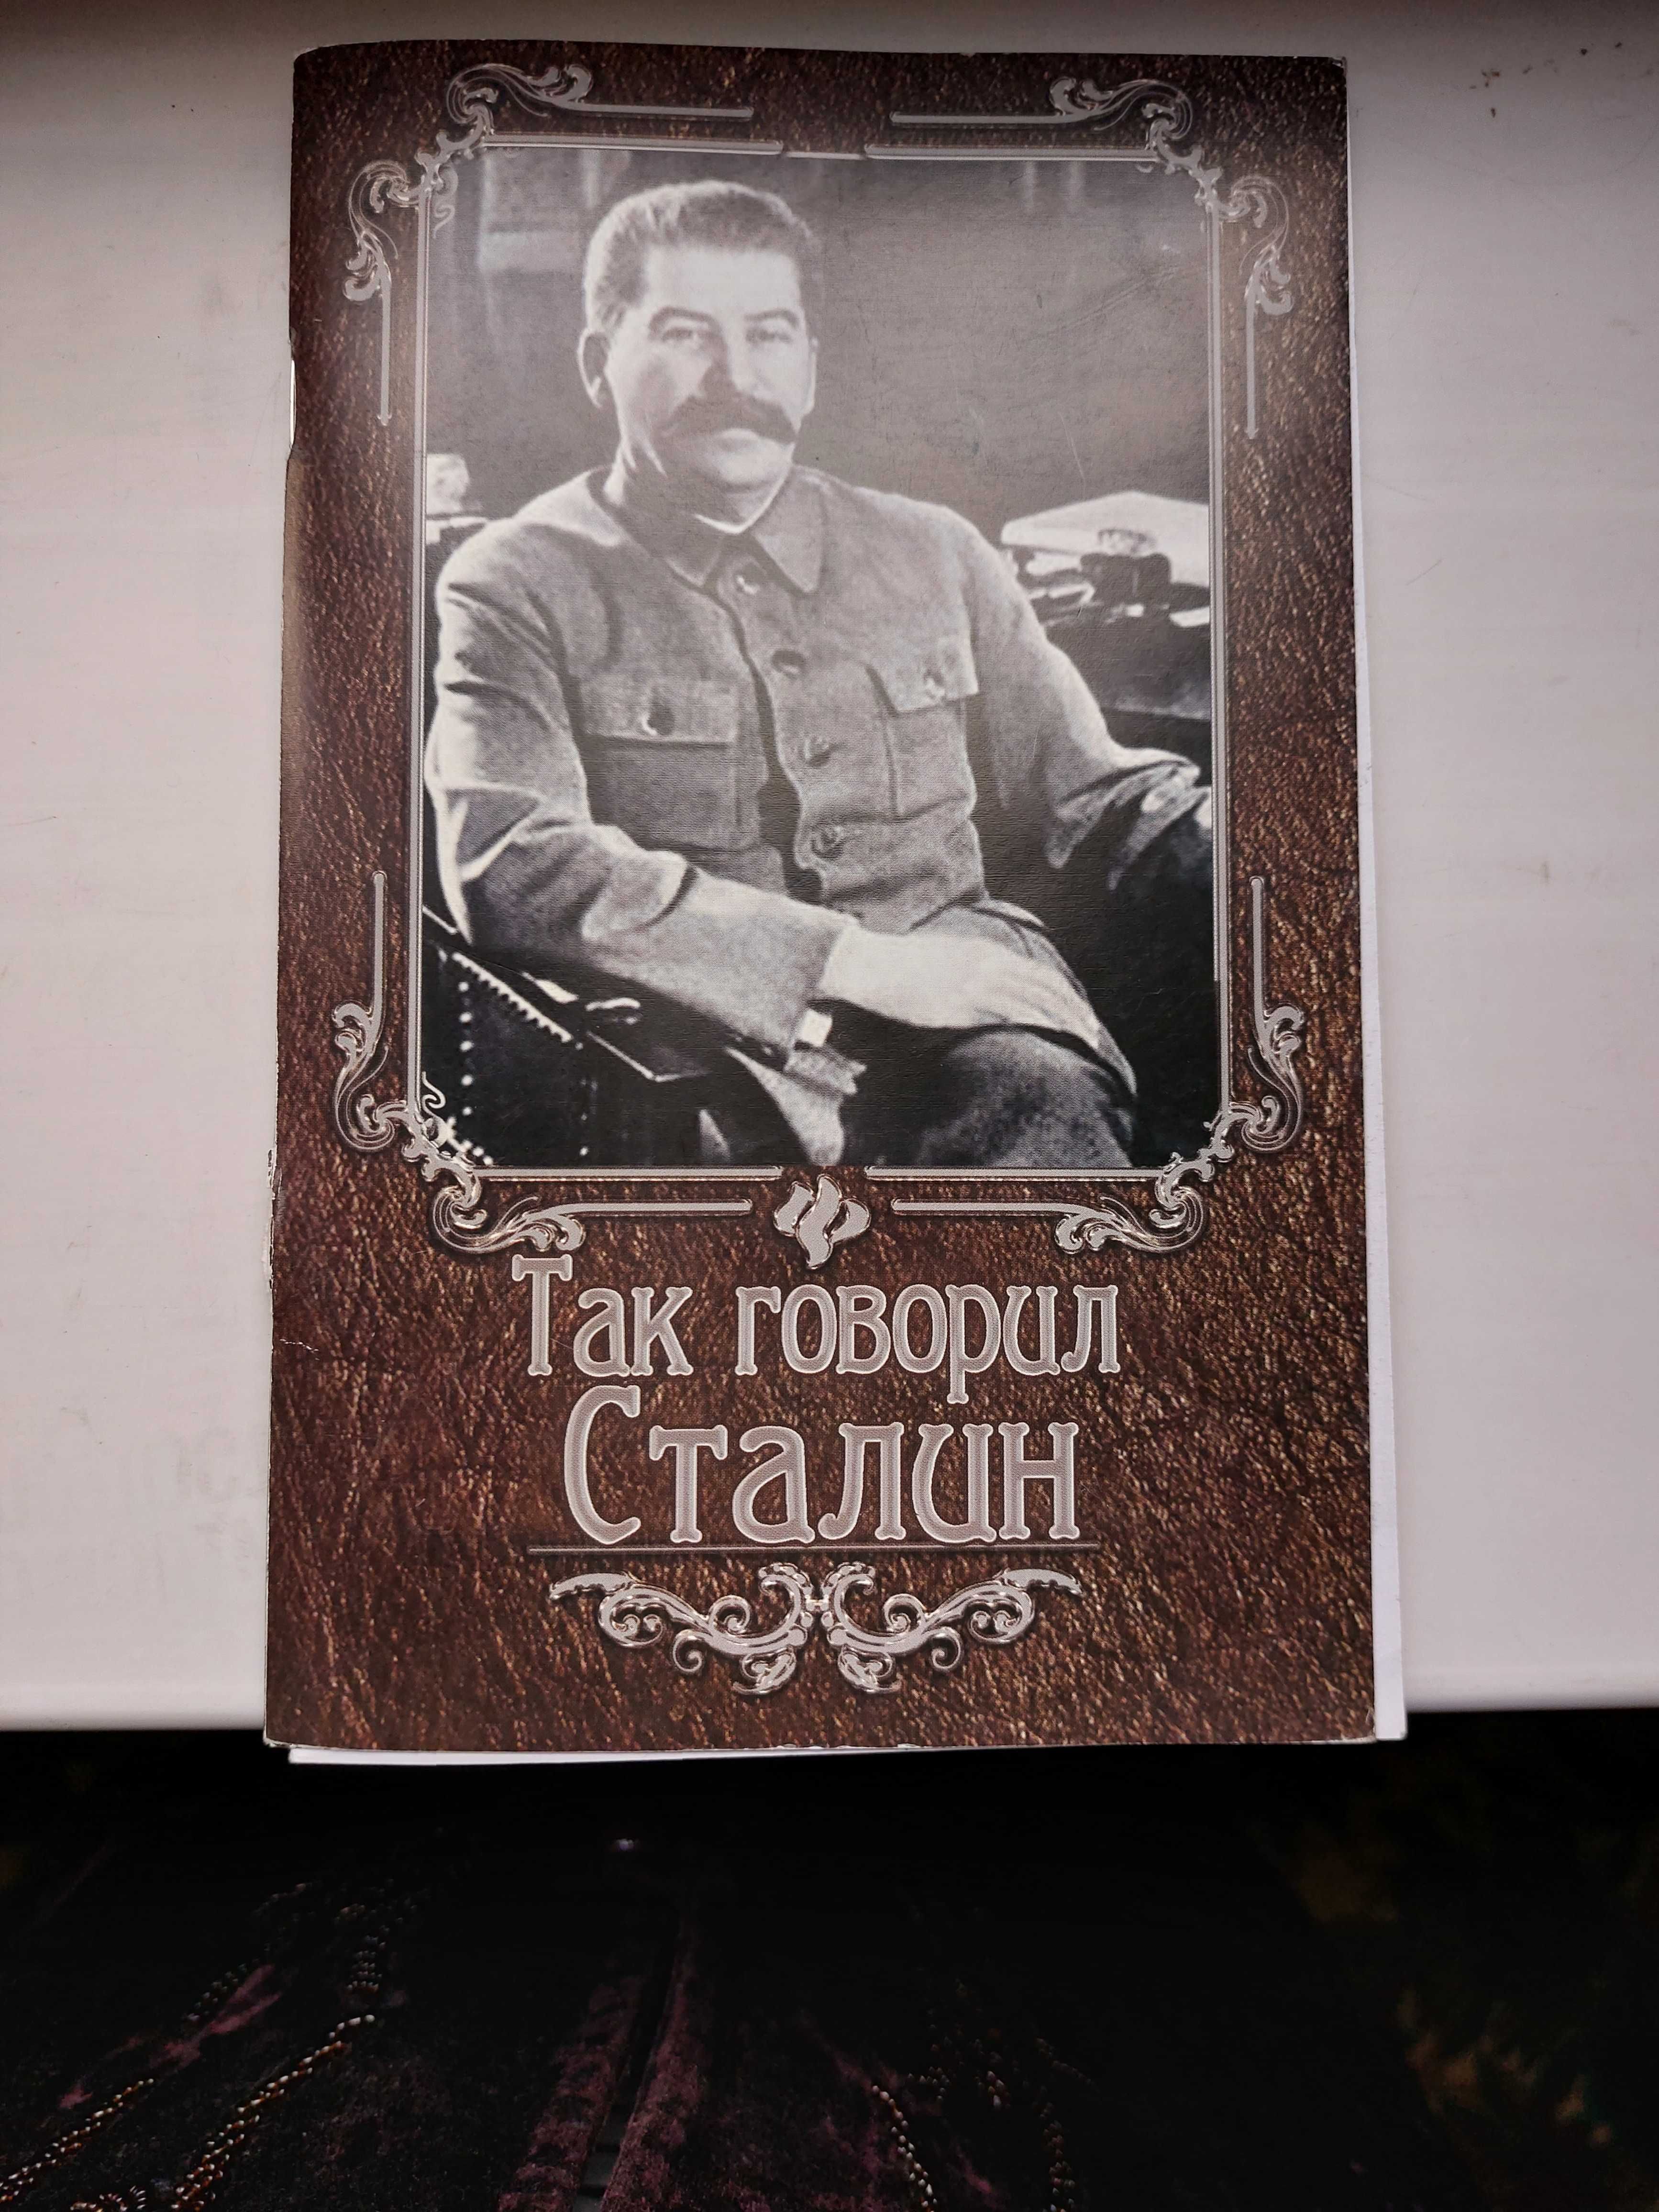 Коллекция книг про Сталина. Библиотека коммуниста.